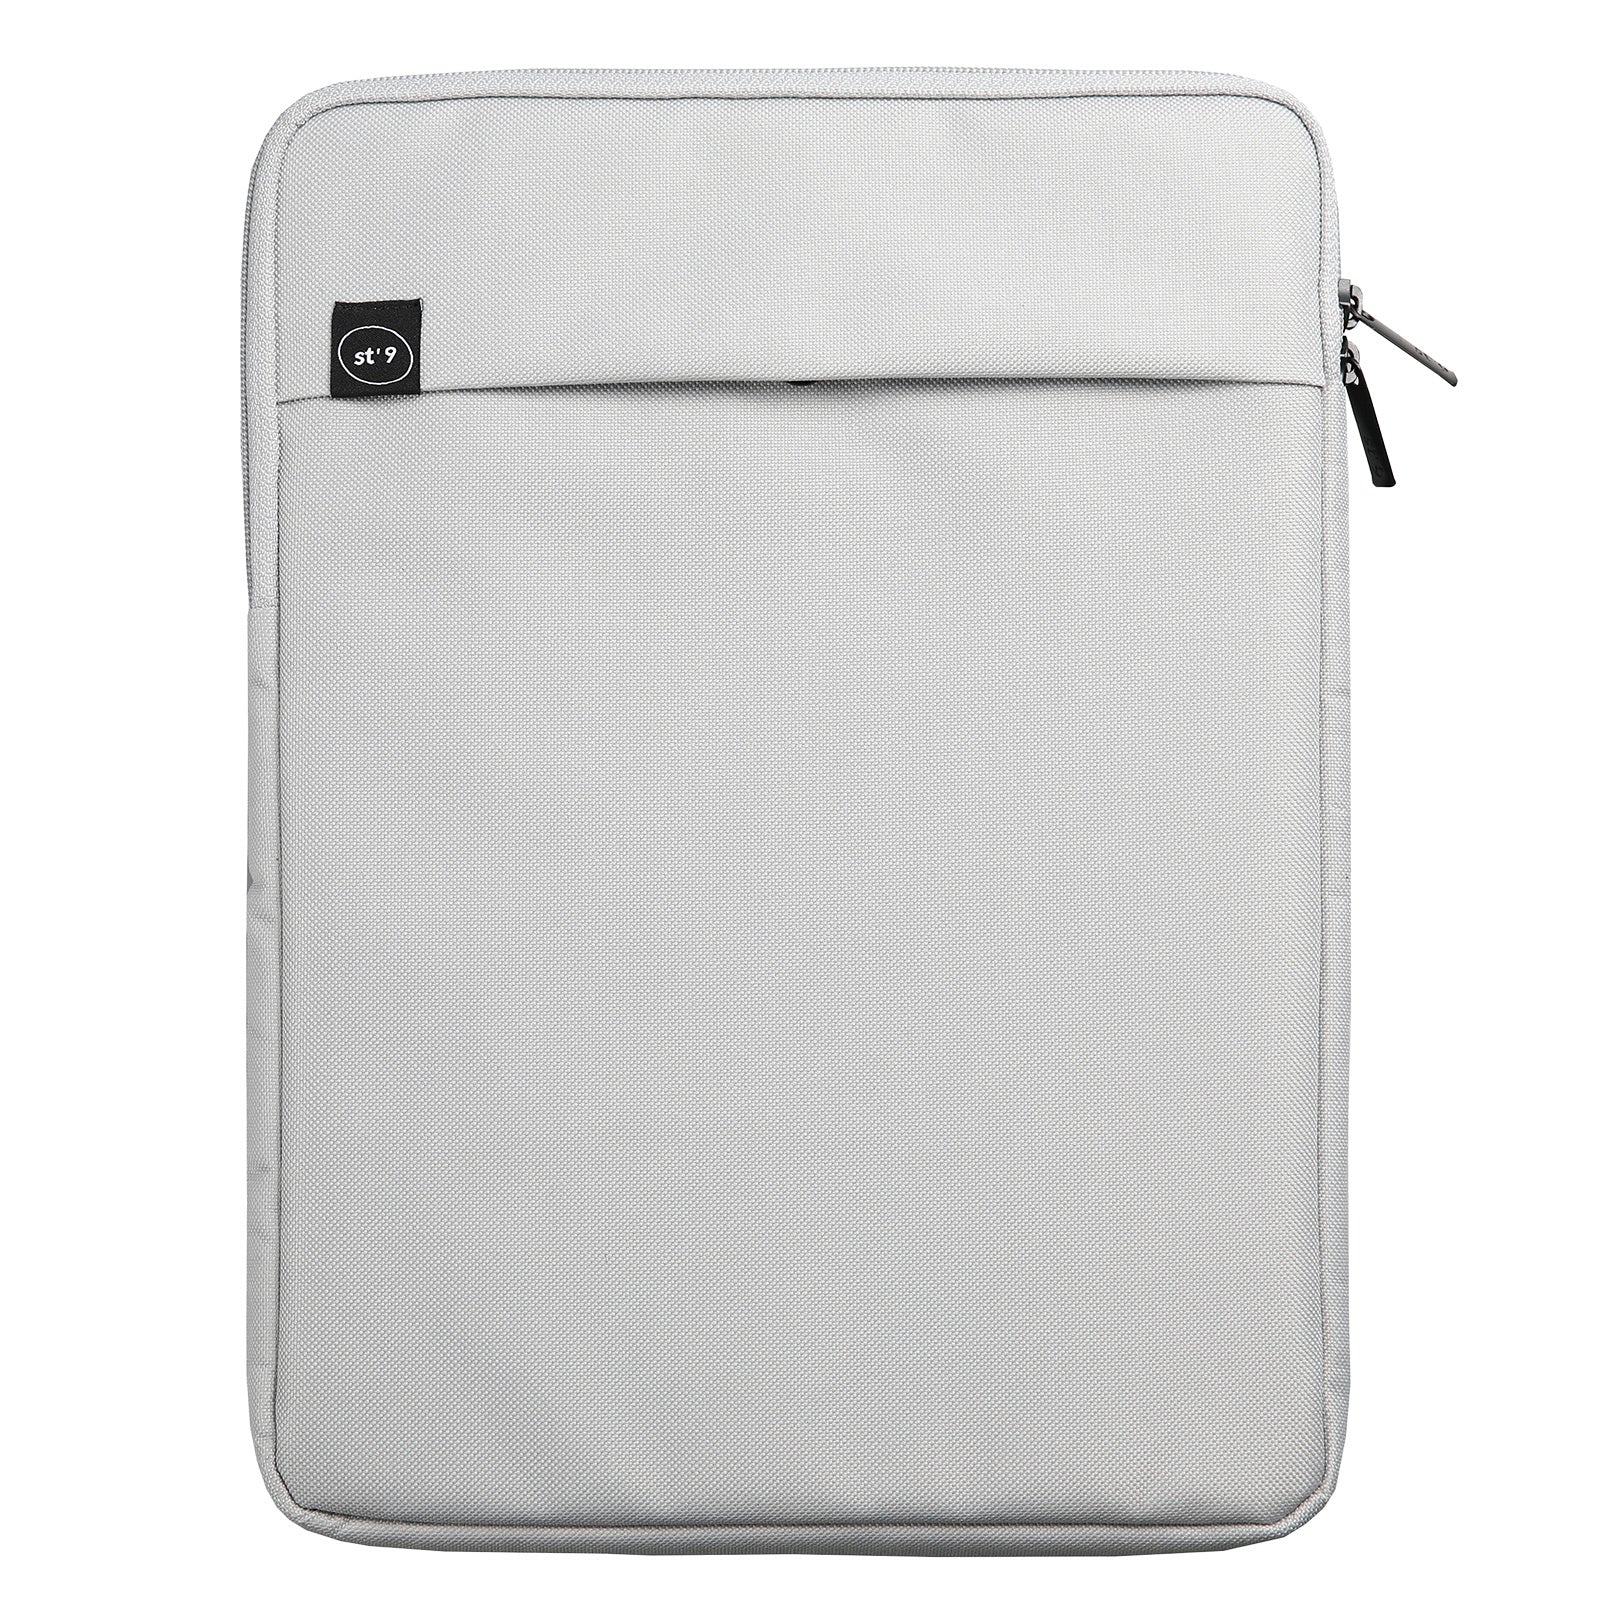 15.6/16 inch Laptop Sleeve Padded Travel Carry Case Bag XL size LUKE GREY